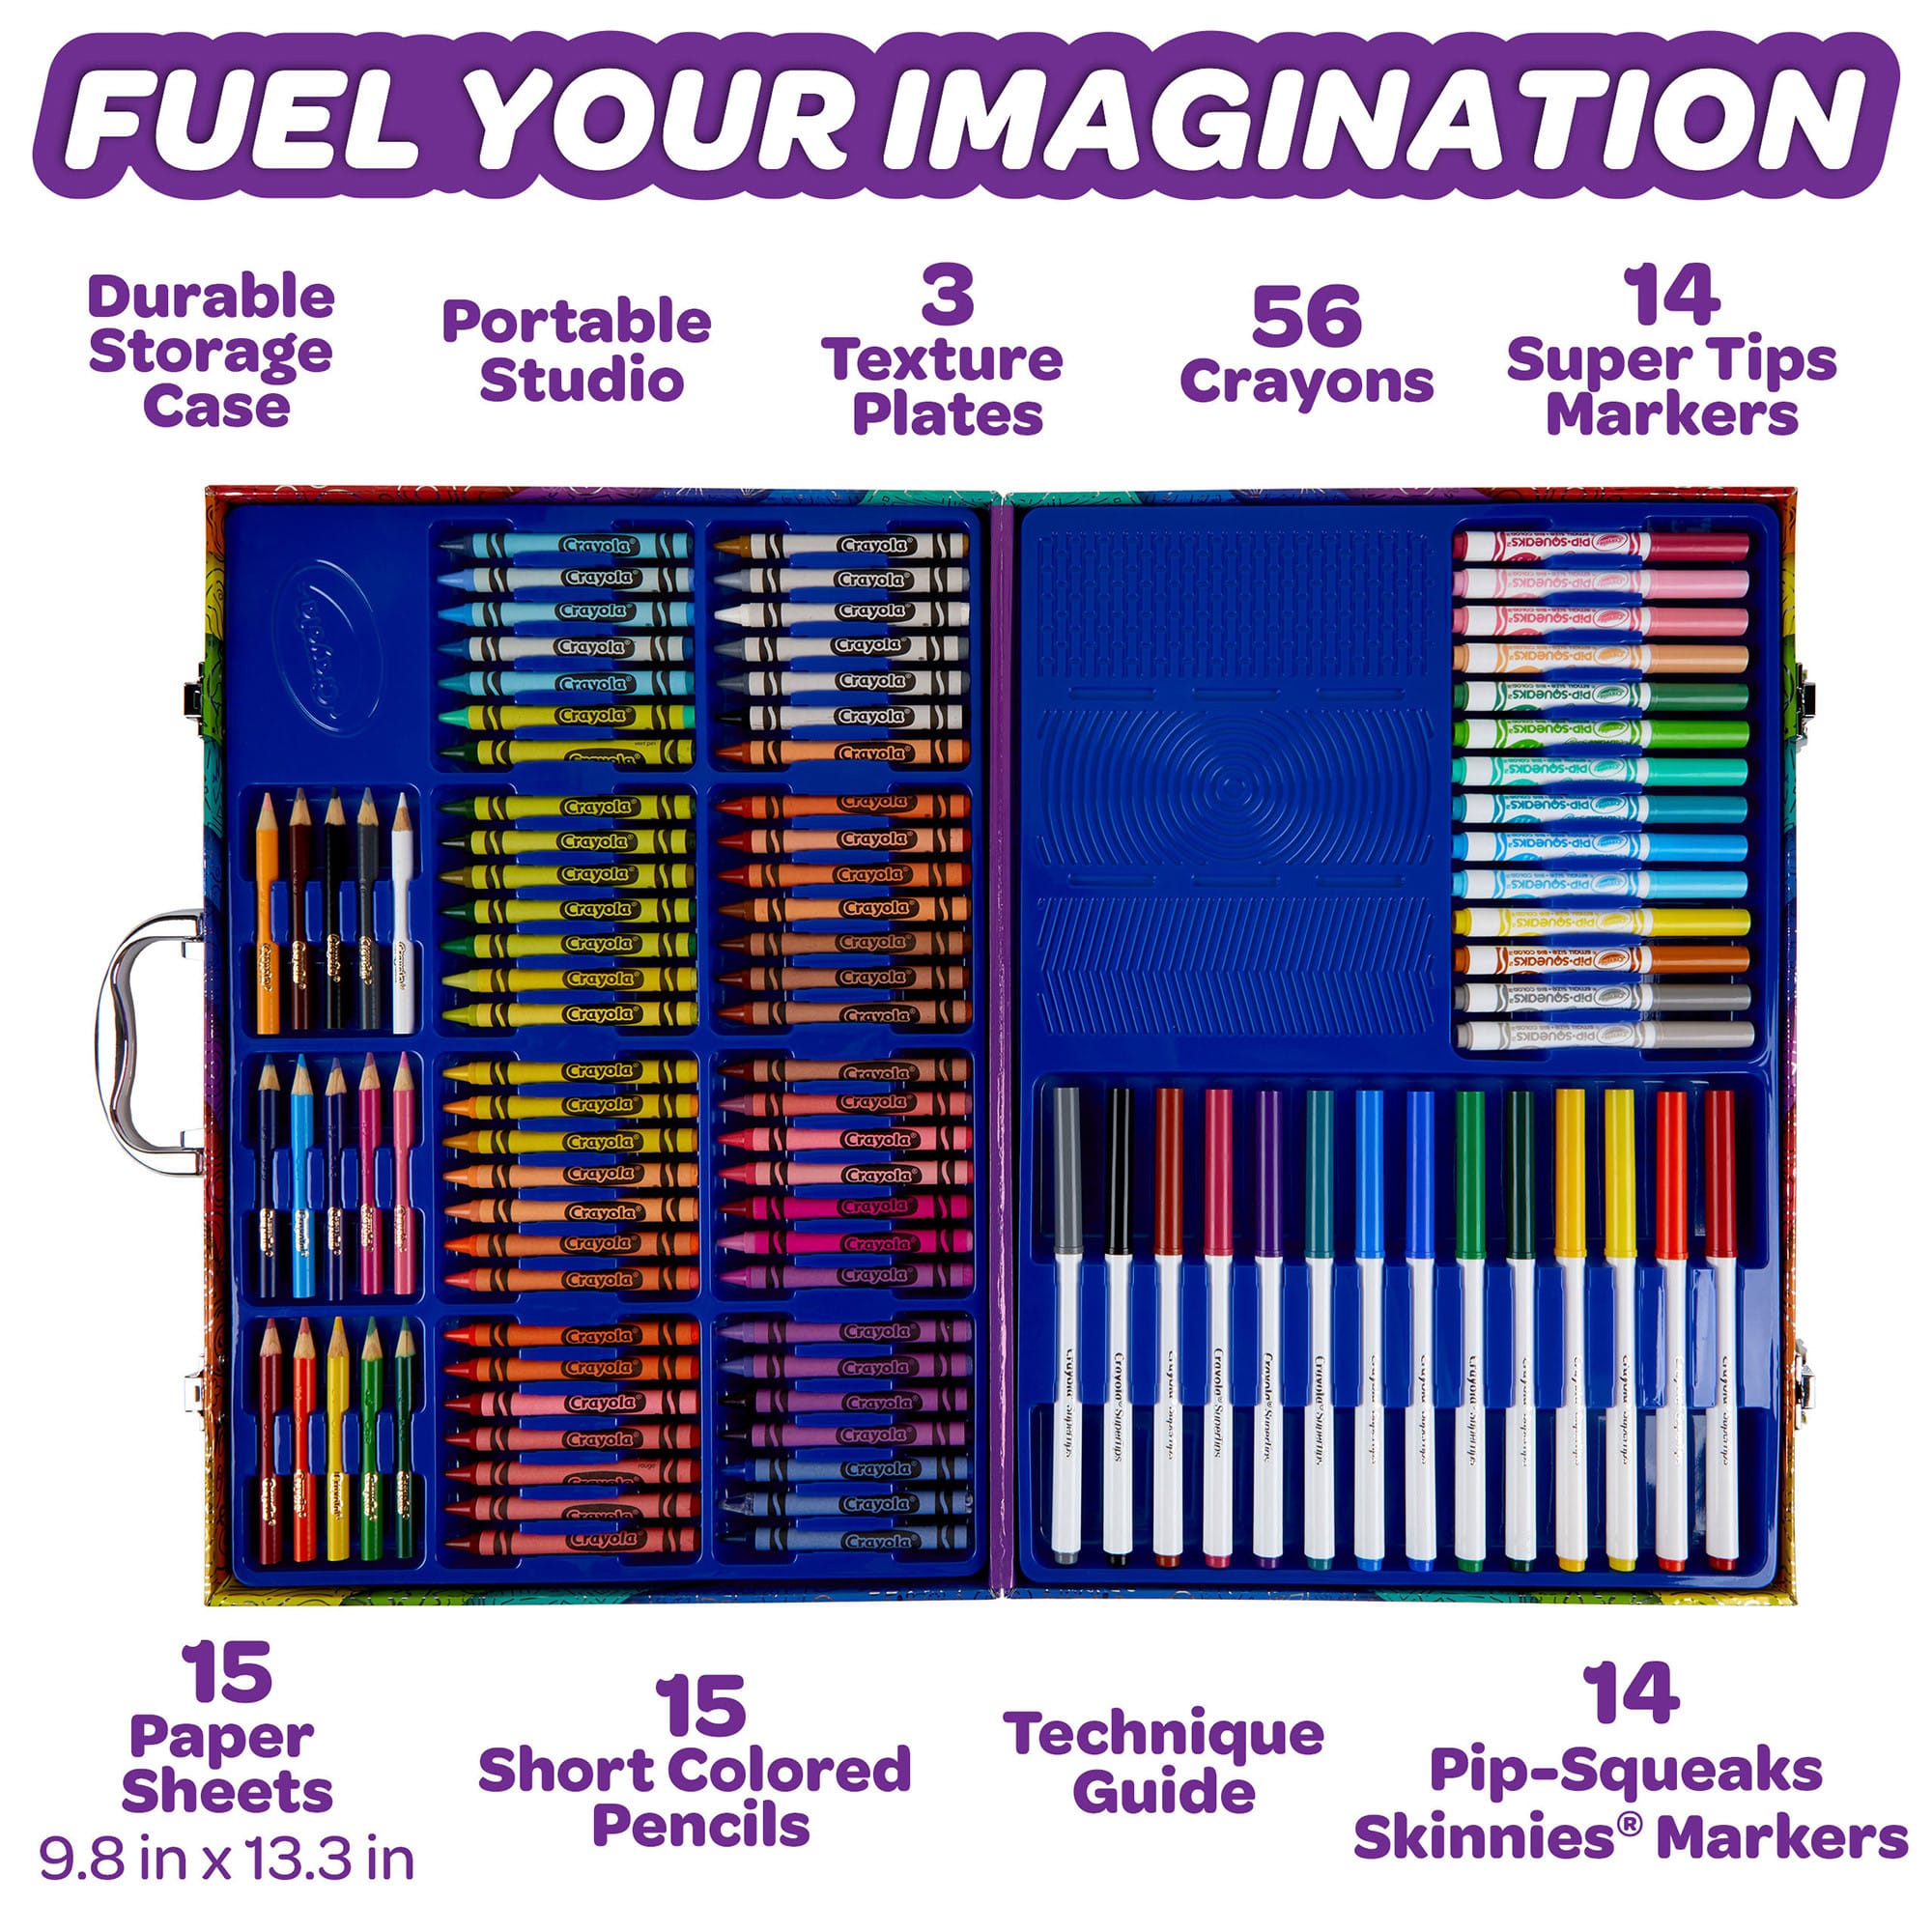 Crayola - Imagination Art Set